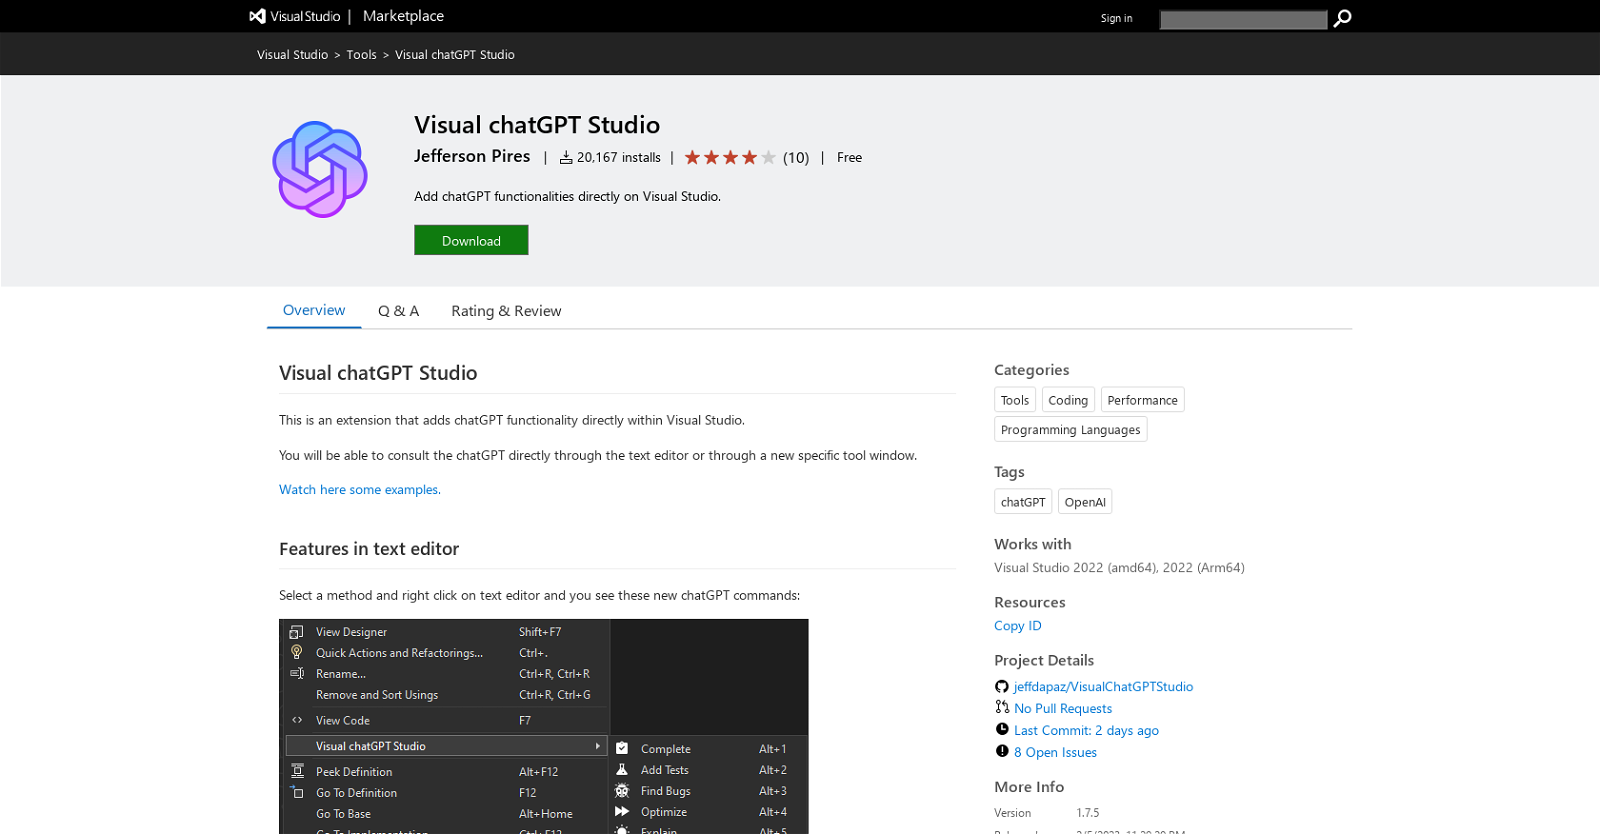 Visual chatGPT Studio